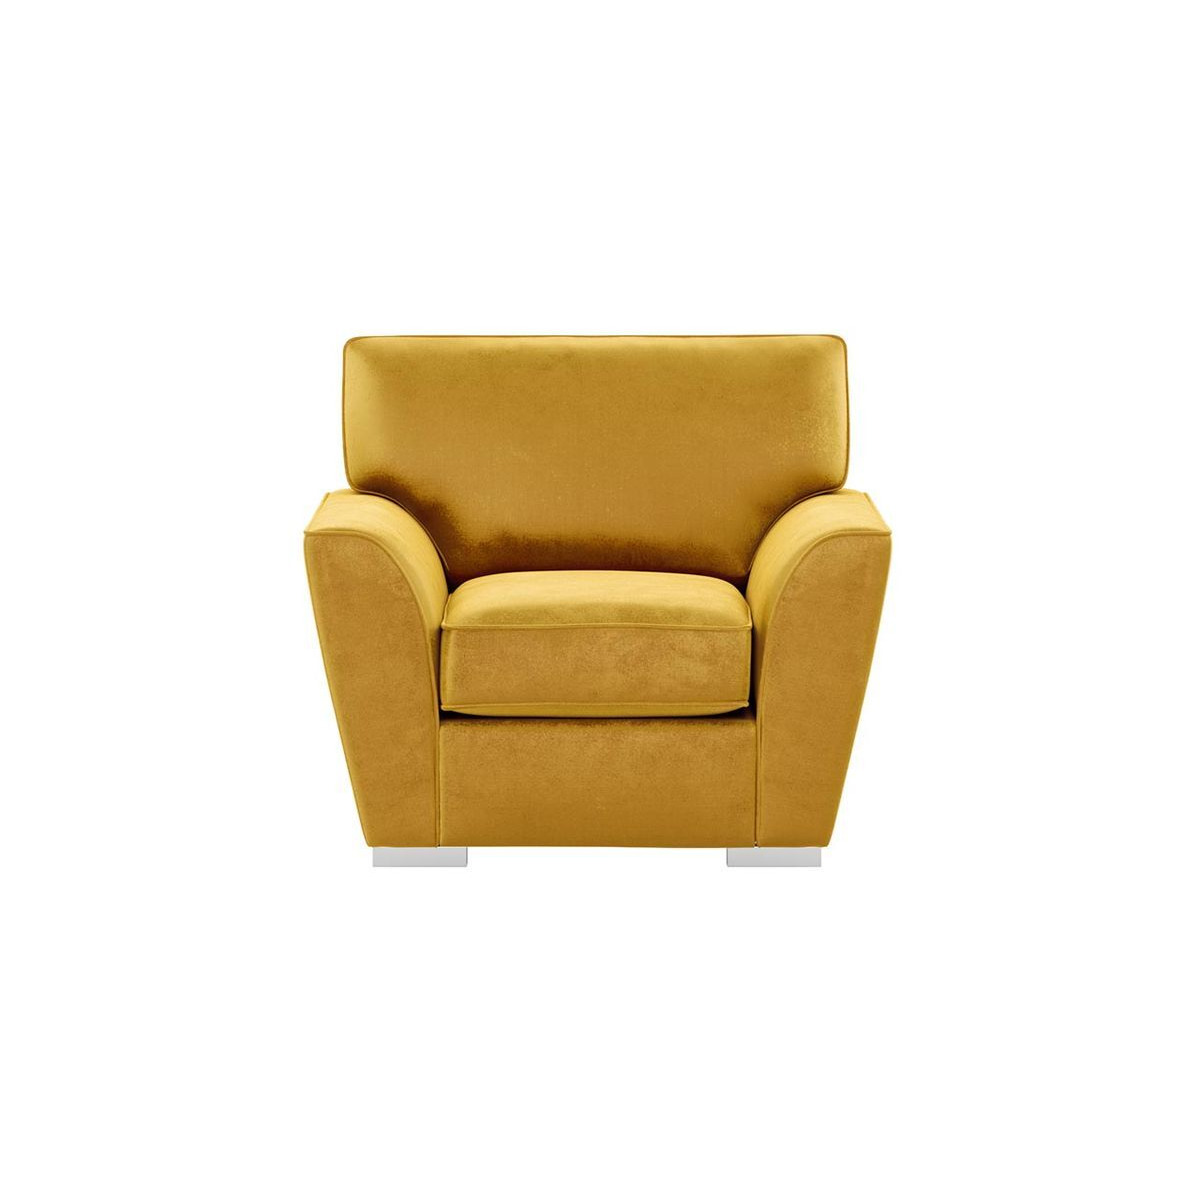 Majestic Armchair, mustard - image 1